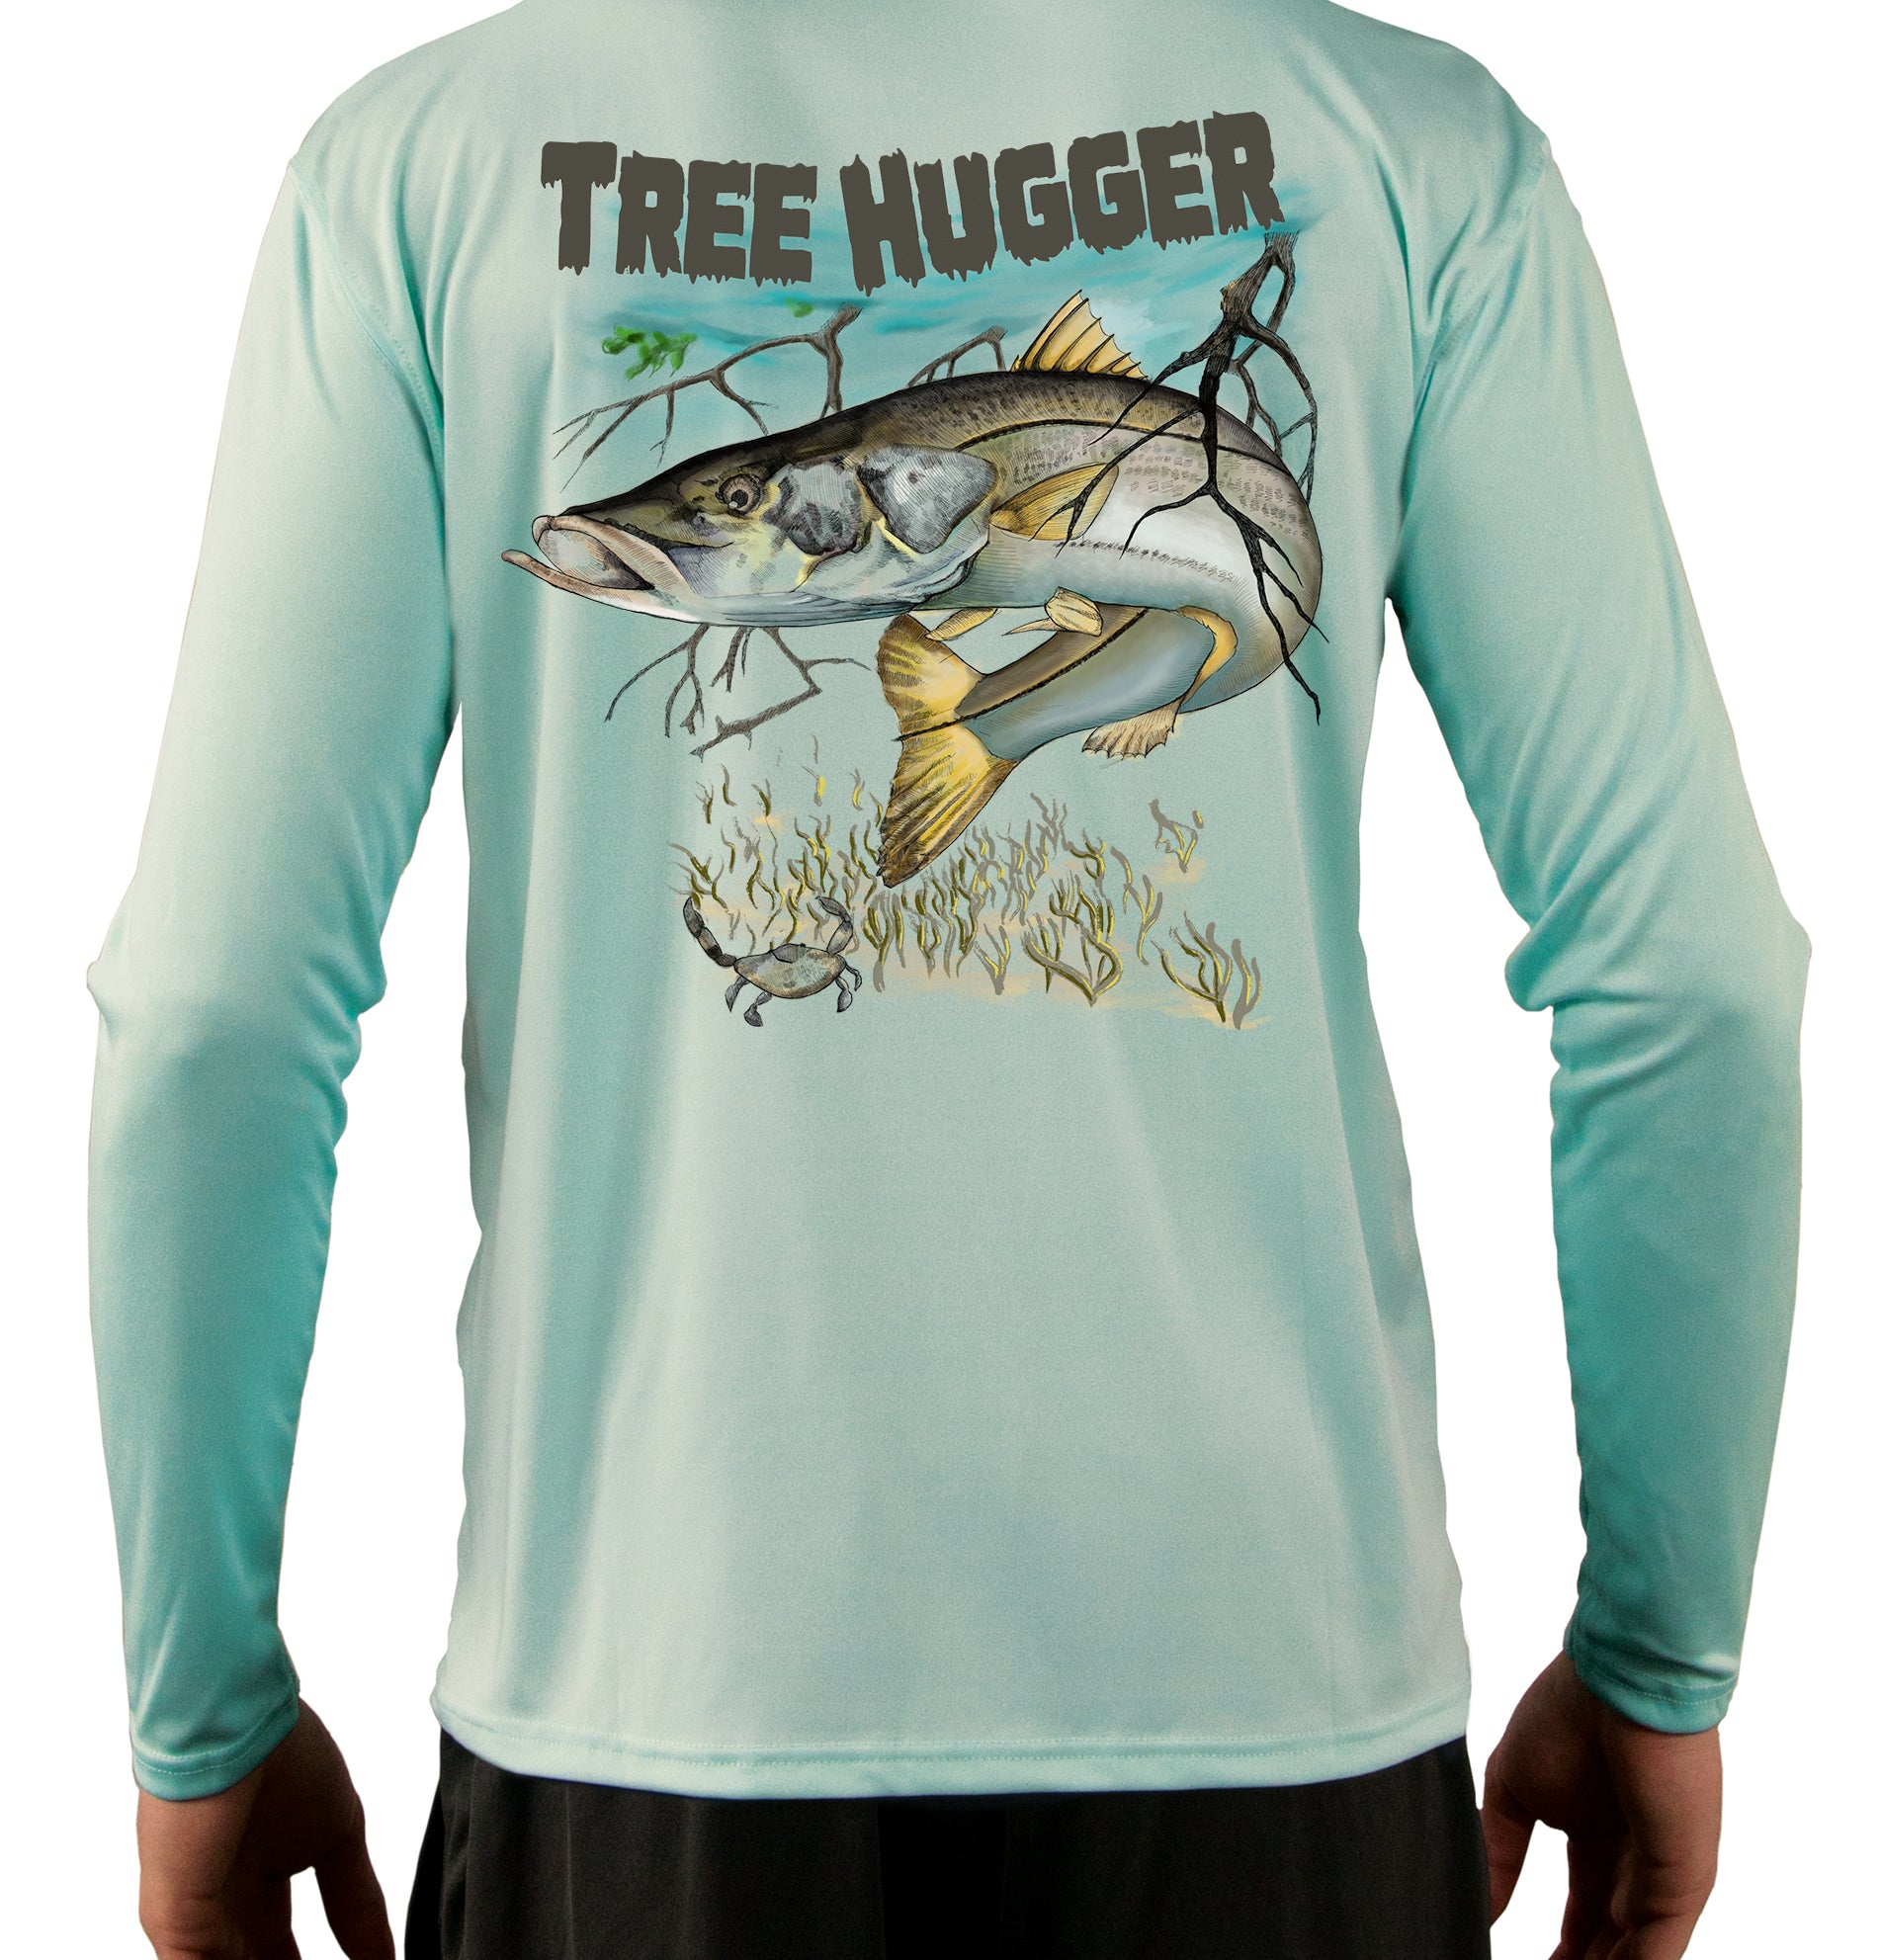 24 Men's fishing shirts ideas  fishing shirts, mens fishing